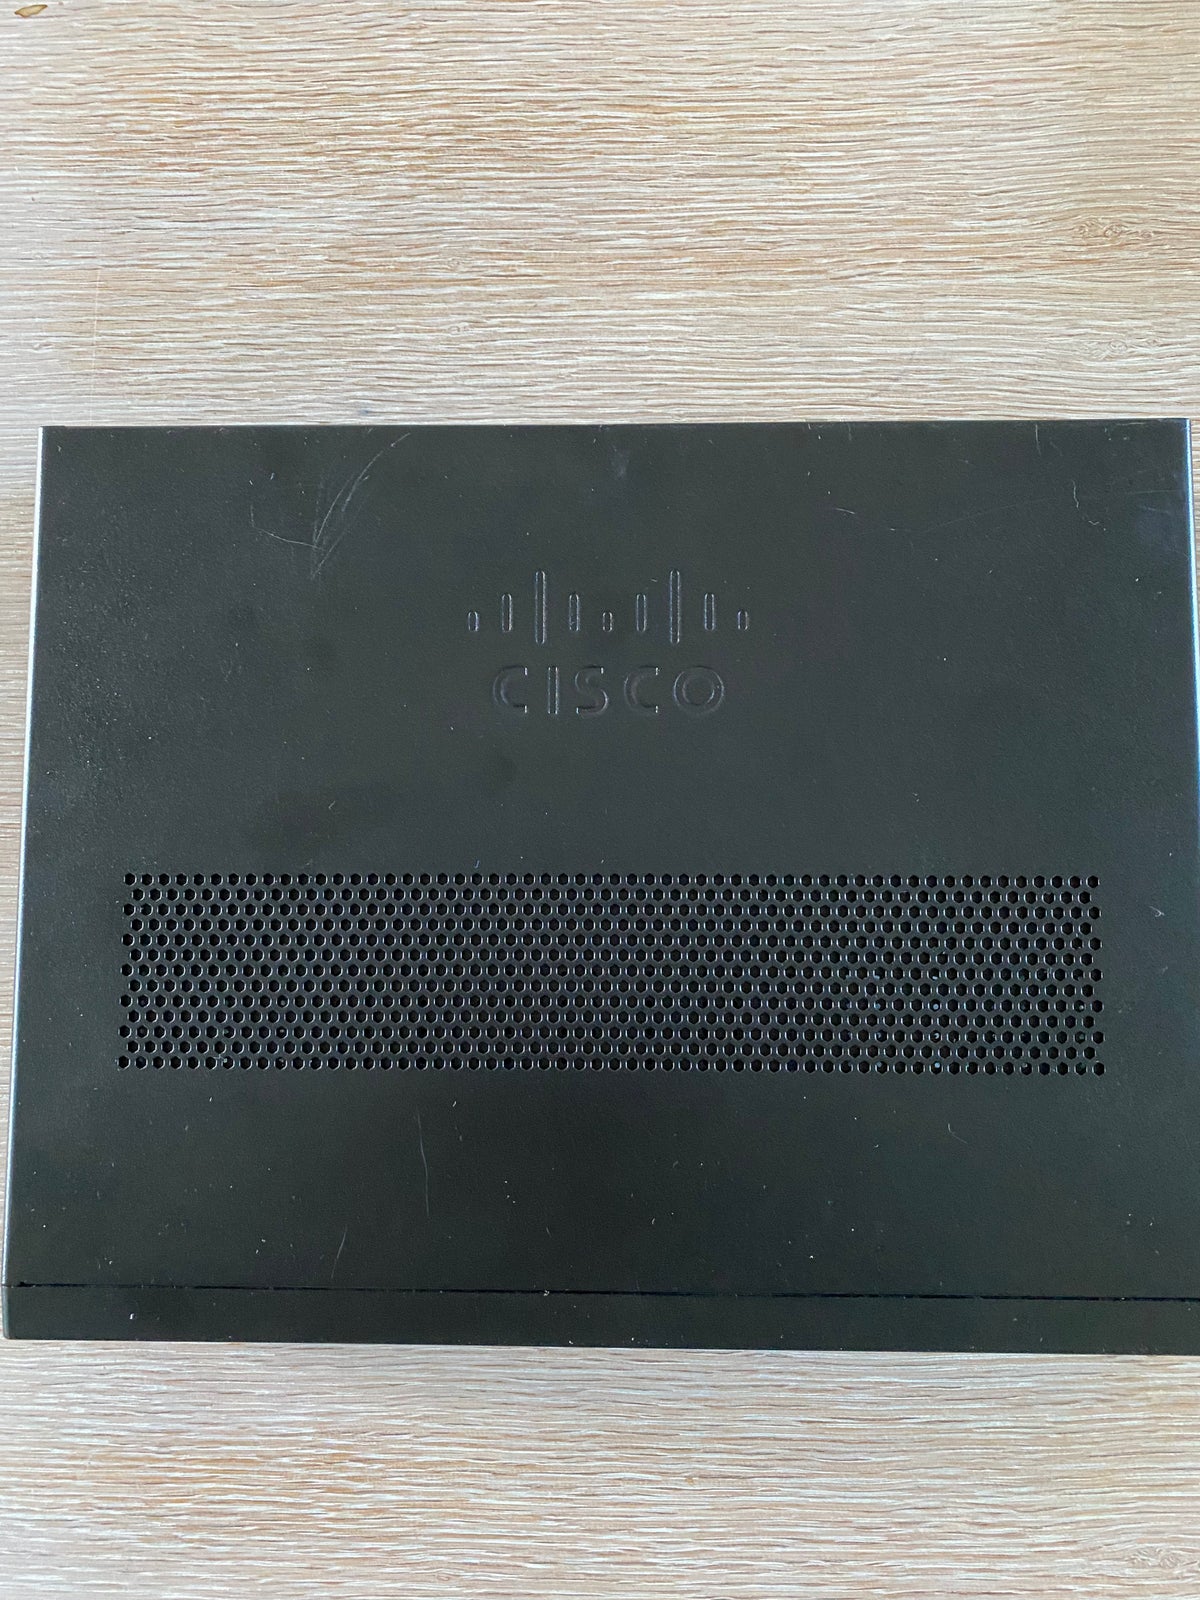 Router, Cisco 890 Series